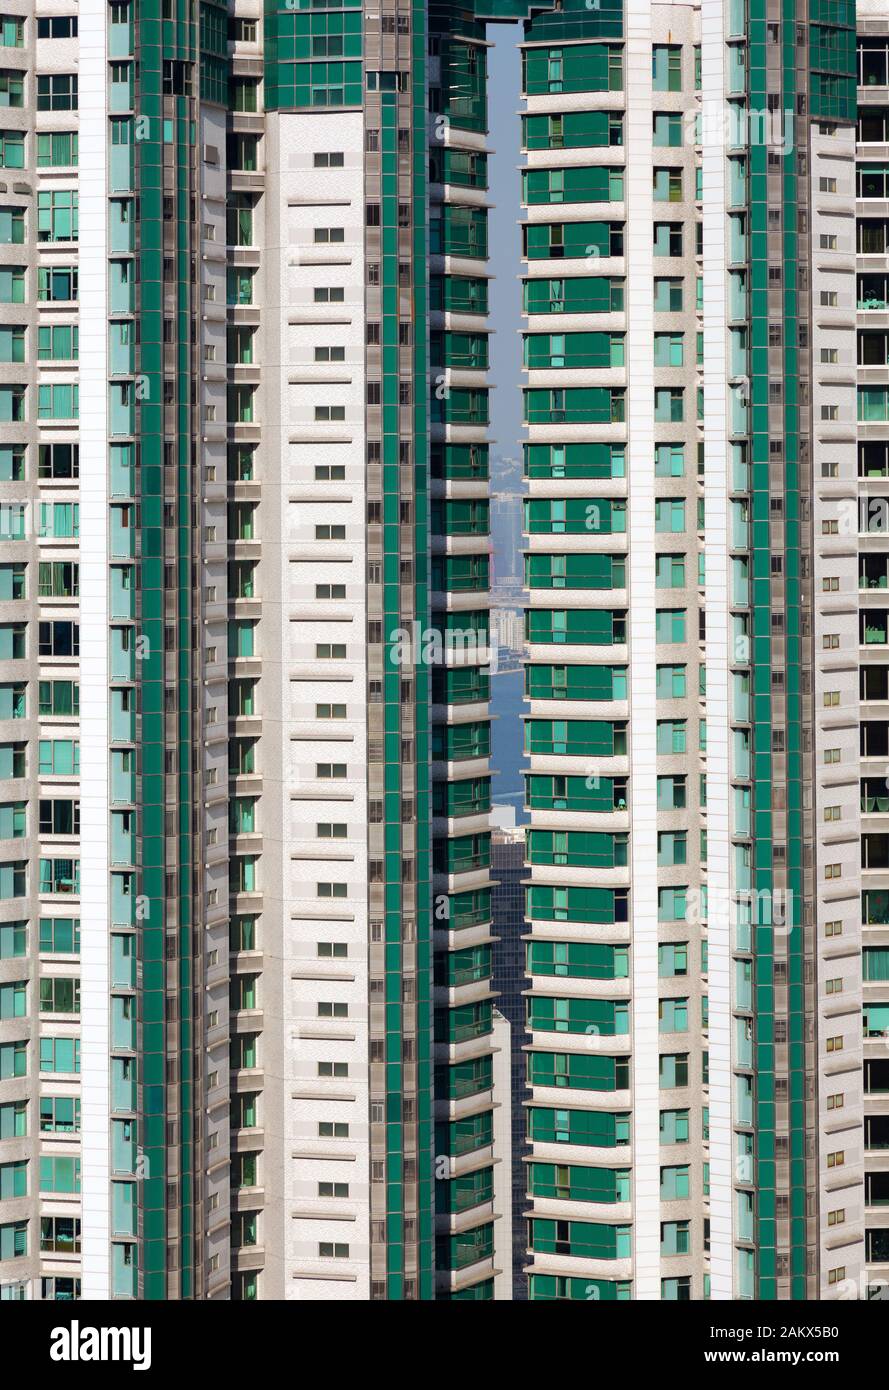 Hong Kong skyscrapers - close up view of green skyscraper with residential accommodation, Hong Kong Island, Hong Kong Asia Stock Photo